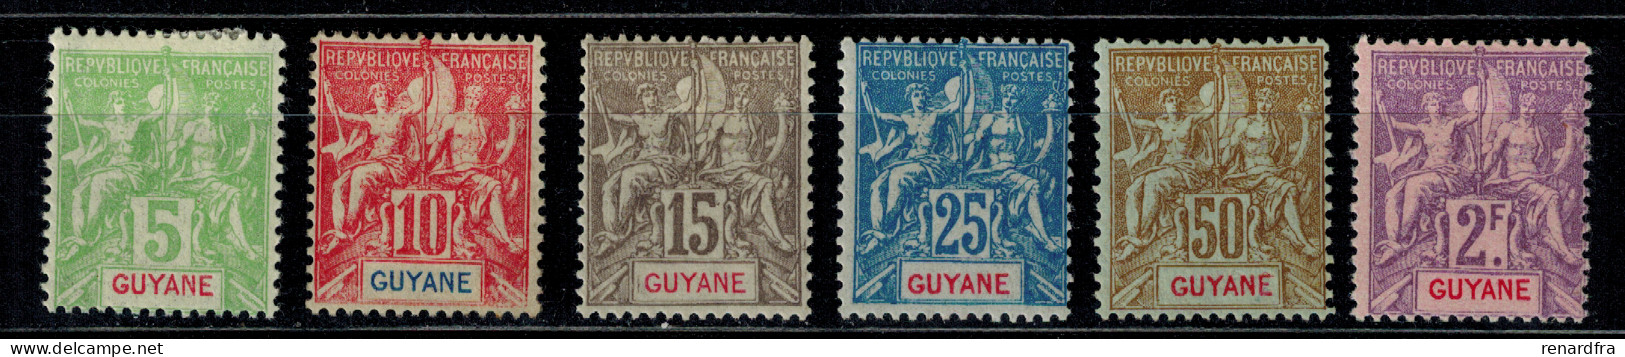 Timbres De Guyane N° 43, 44, 45, 46, 47, 48 Neuf * / MH - Neufs